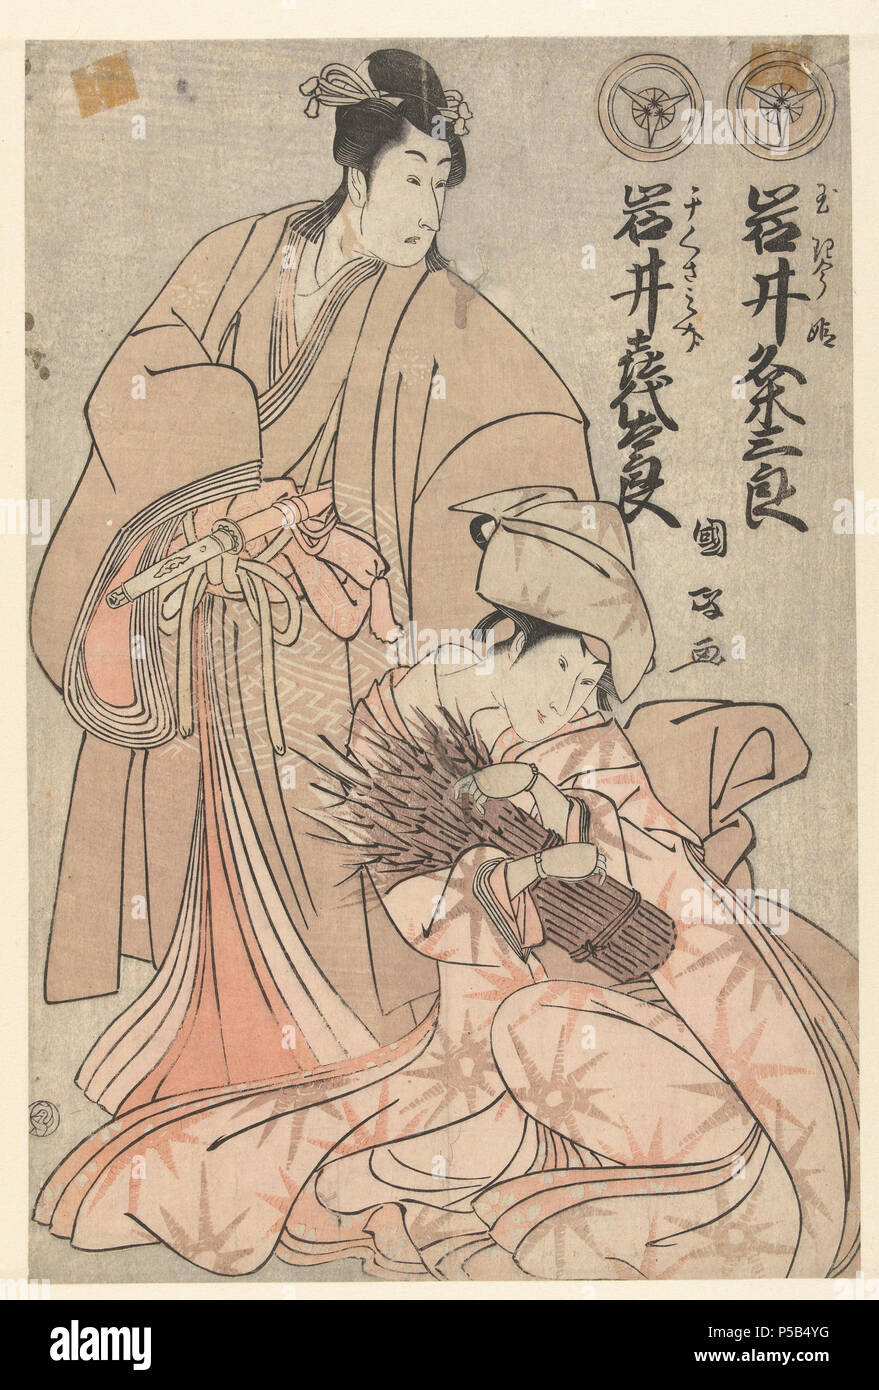 Dubbelportret van Iwai Kumesaburo en Iwai Kiyotaro . Nederlands: De acteur Iwai Kumesaburo in de rol van de edelman Chikusanosuke, staand incontrato zwaard, en de acteur Iwai Kiyotaro, in vrouwenroll als prinses Tamakoto, zittend incontrato bundel takken. Scena uit het toneelstuk Hana o mimasu Yoshino no miyuki, opgevoerd in het Nakamura-za nel 1798. Etichetta Linea: menzionato su oggetto Kunimasa Utagawa (1773 - 1810), 1798, kleurenhoutsnede; lijnblok in zwart incontrato kleurblokken collezione: prenten; Giappone (collectie) . 1798. N/A 482 Dubbelportret van Iwai Kumesaburo en Iwai Kiyotaro-Rijksmuseum RP-P-1956-778 Foto Stock